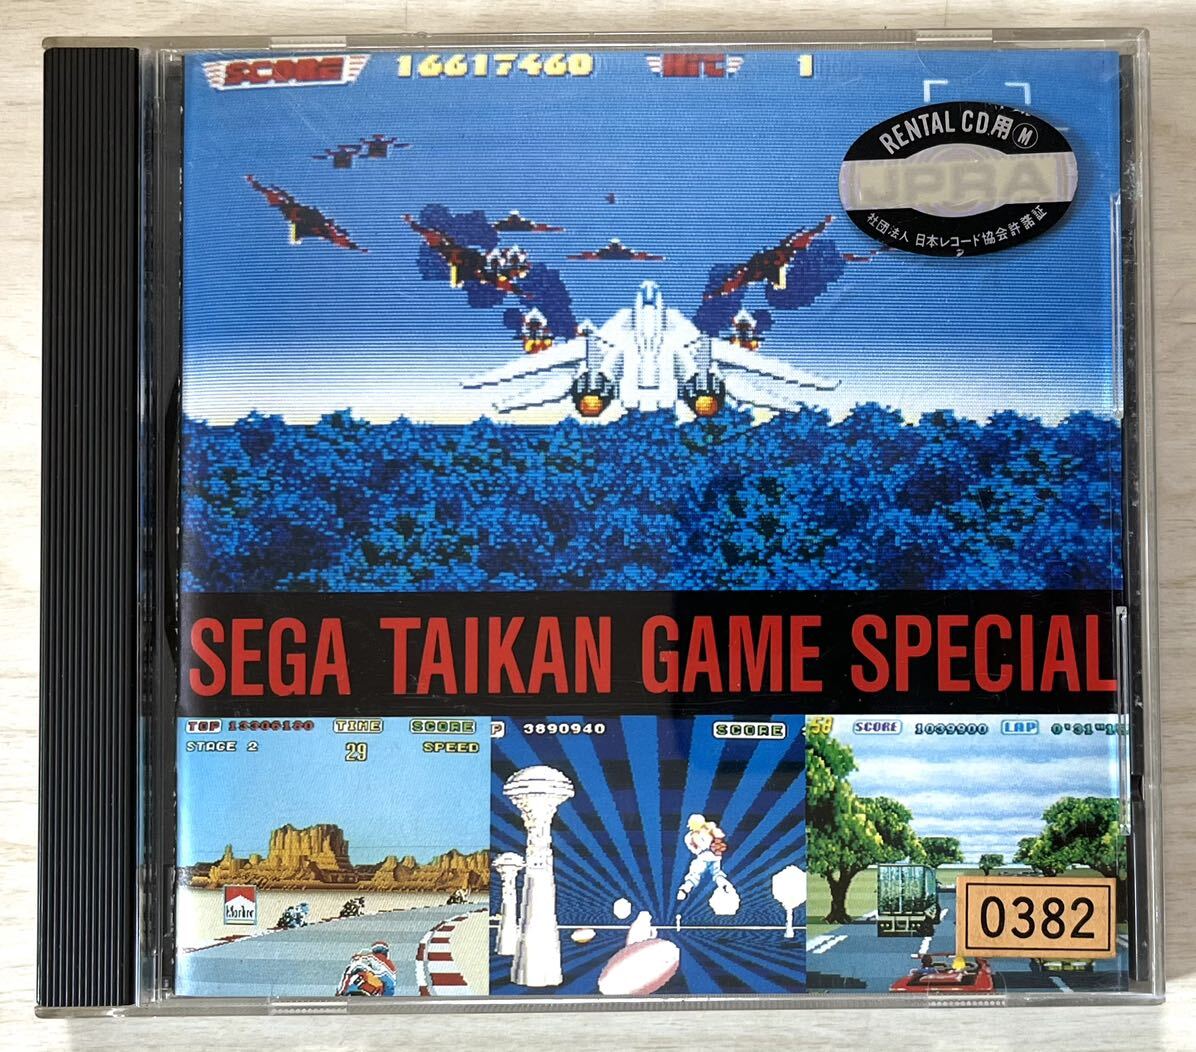 CD* Sega bodily sensation game special SEGA TAIKAN GAME SPECIAL game music reproduction verification settled 28XA-198 rental 